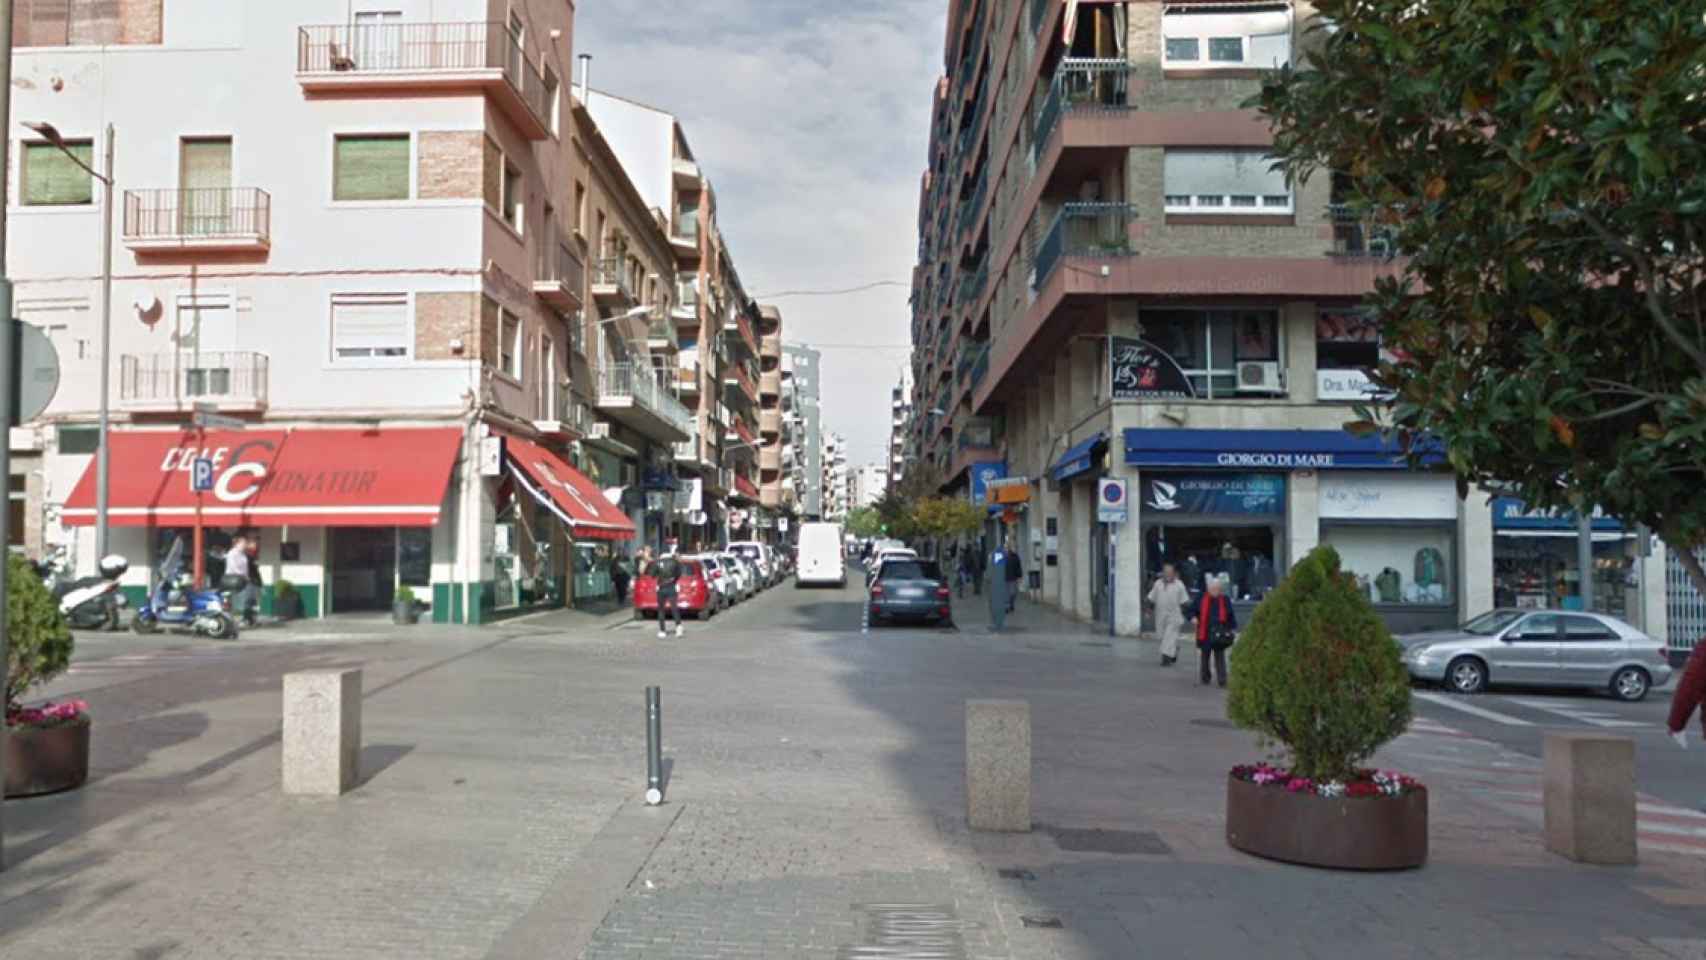 Calle Pi i Maragall en Lleida, donde han dejado inconsciente a un hombre de un puñetazo, para robarle el móvil / GOOGLE STREET VIEW